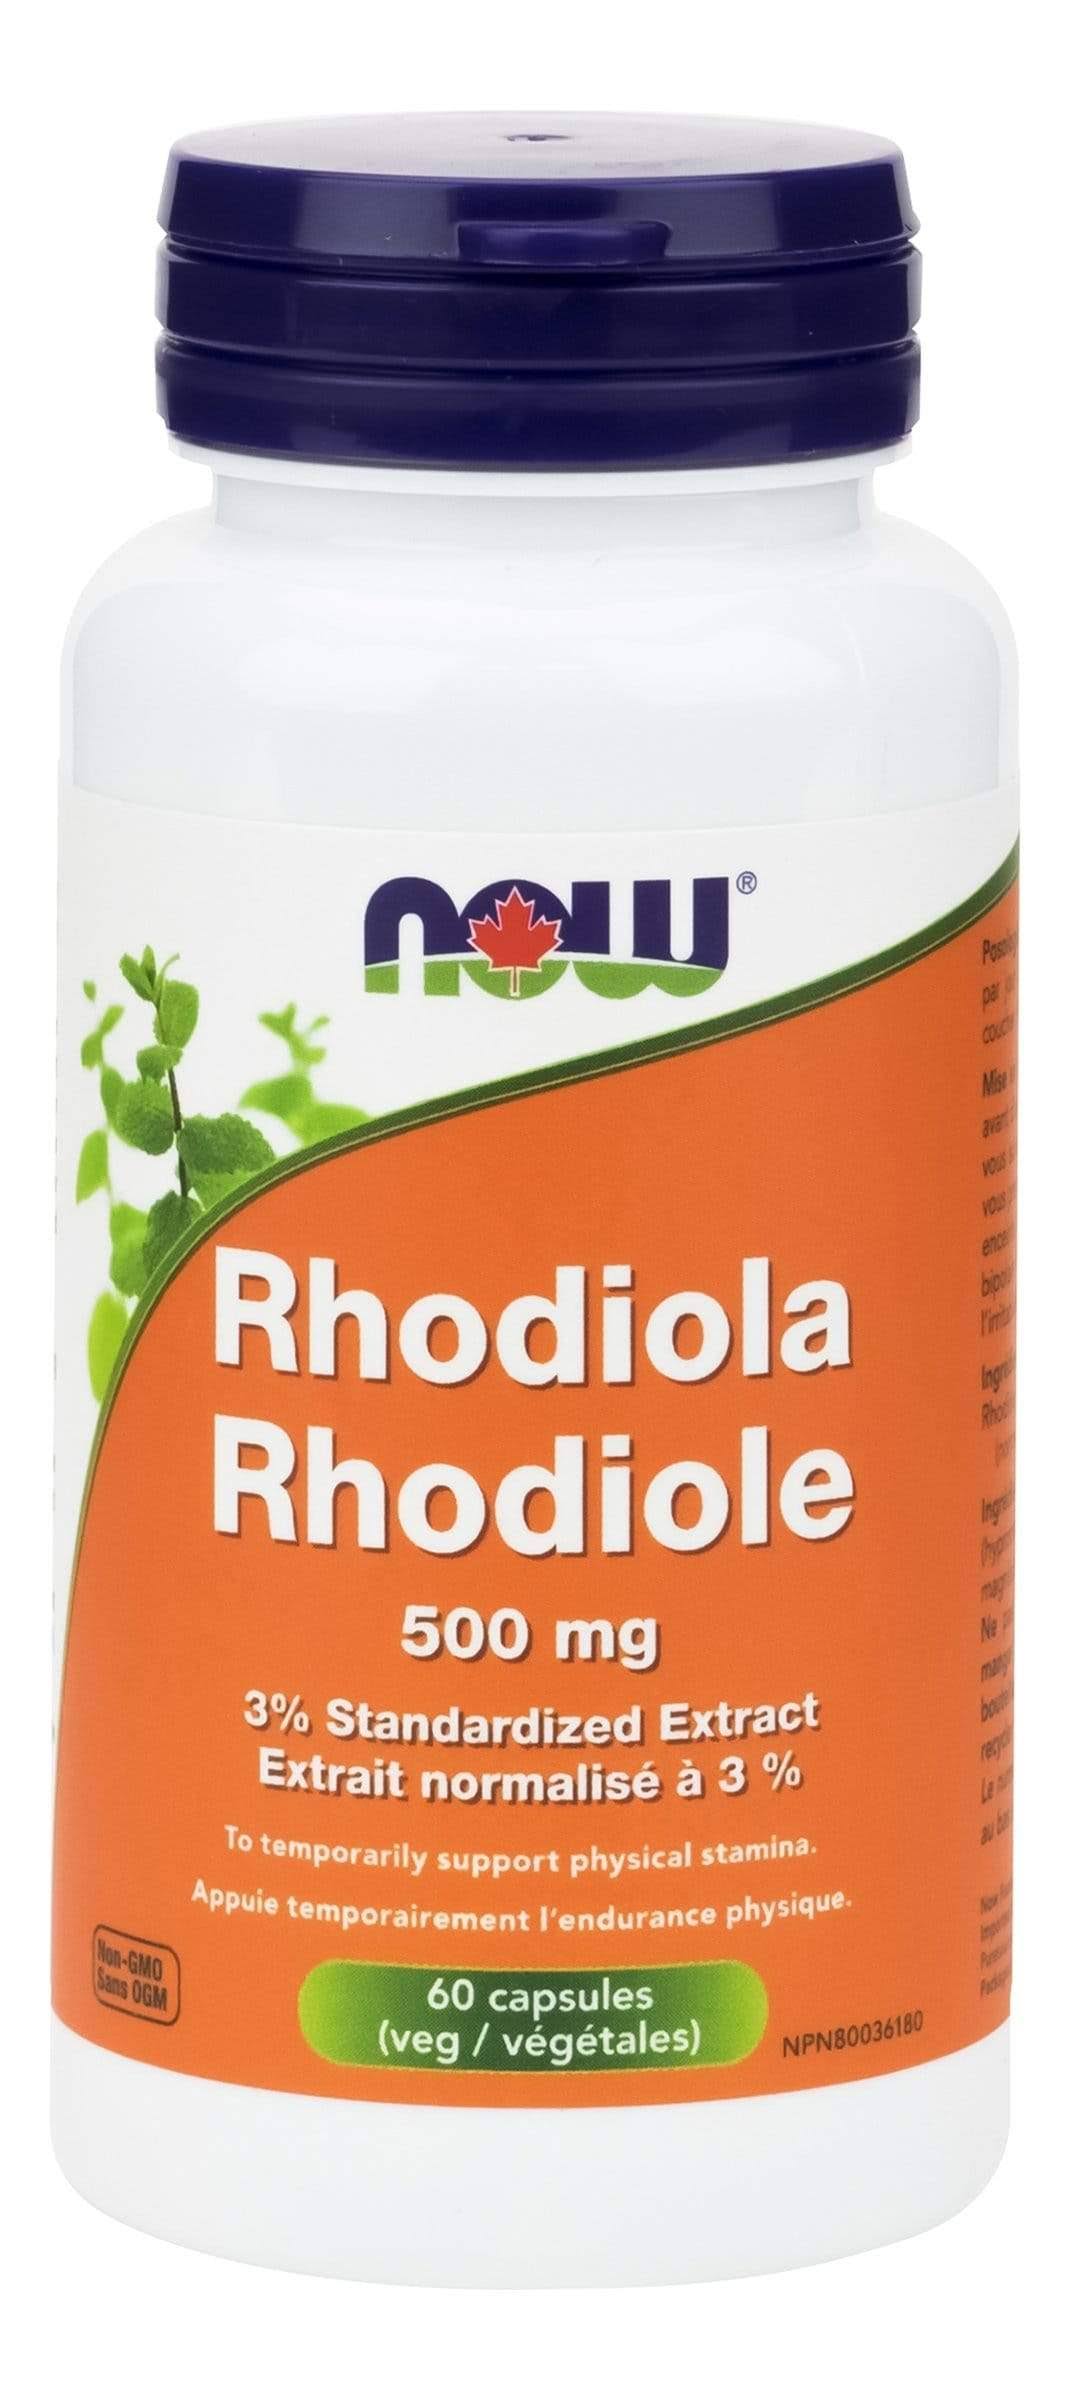 Now Rhodiola Supplement - 60 Veg Capsules